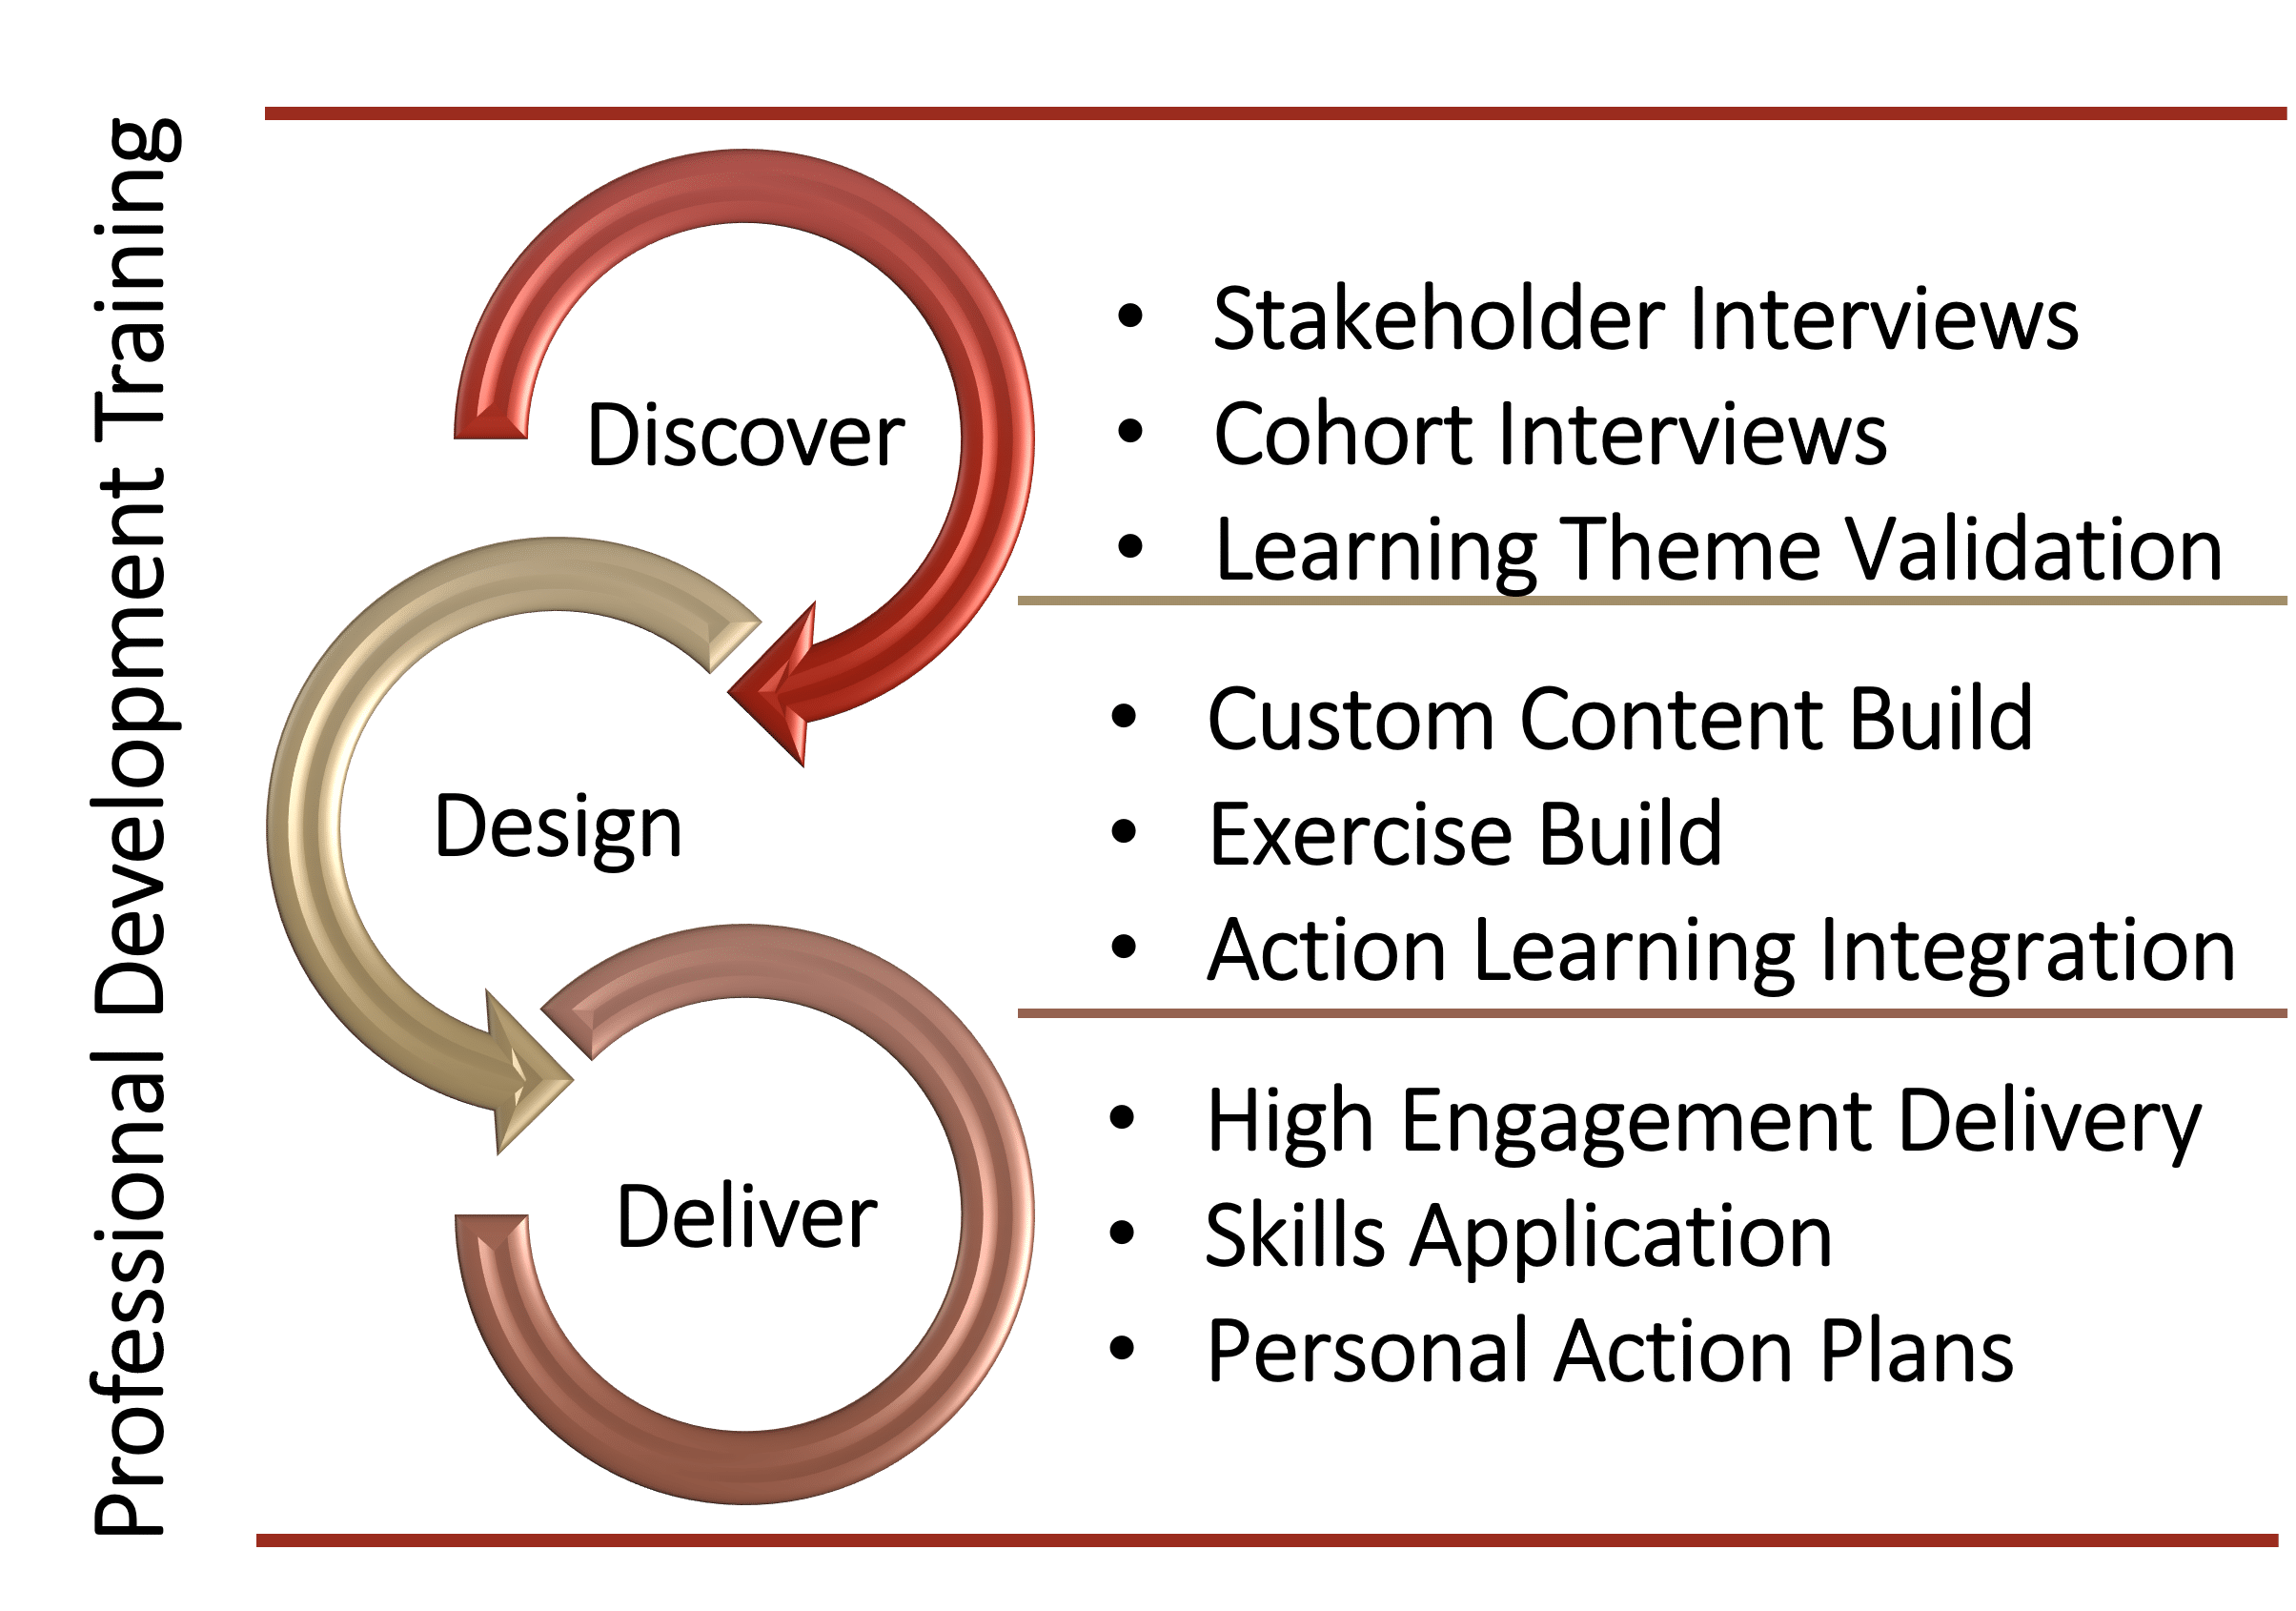 AMS Professional Development Training Model for Engagement